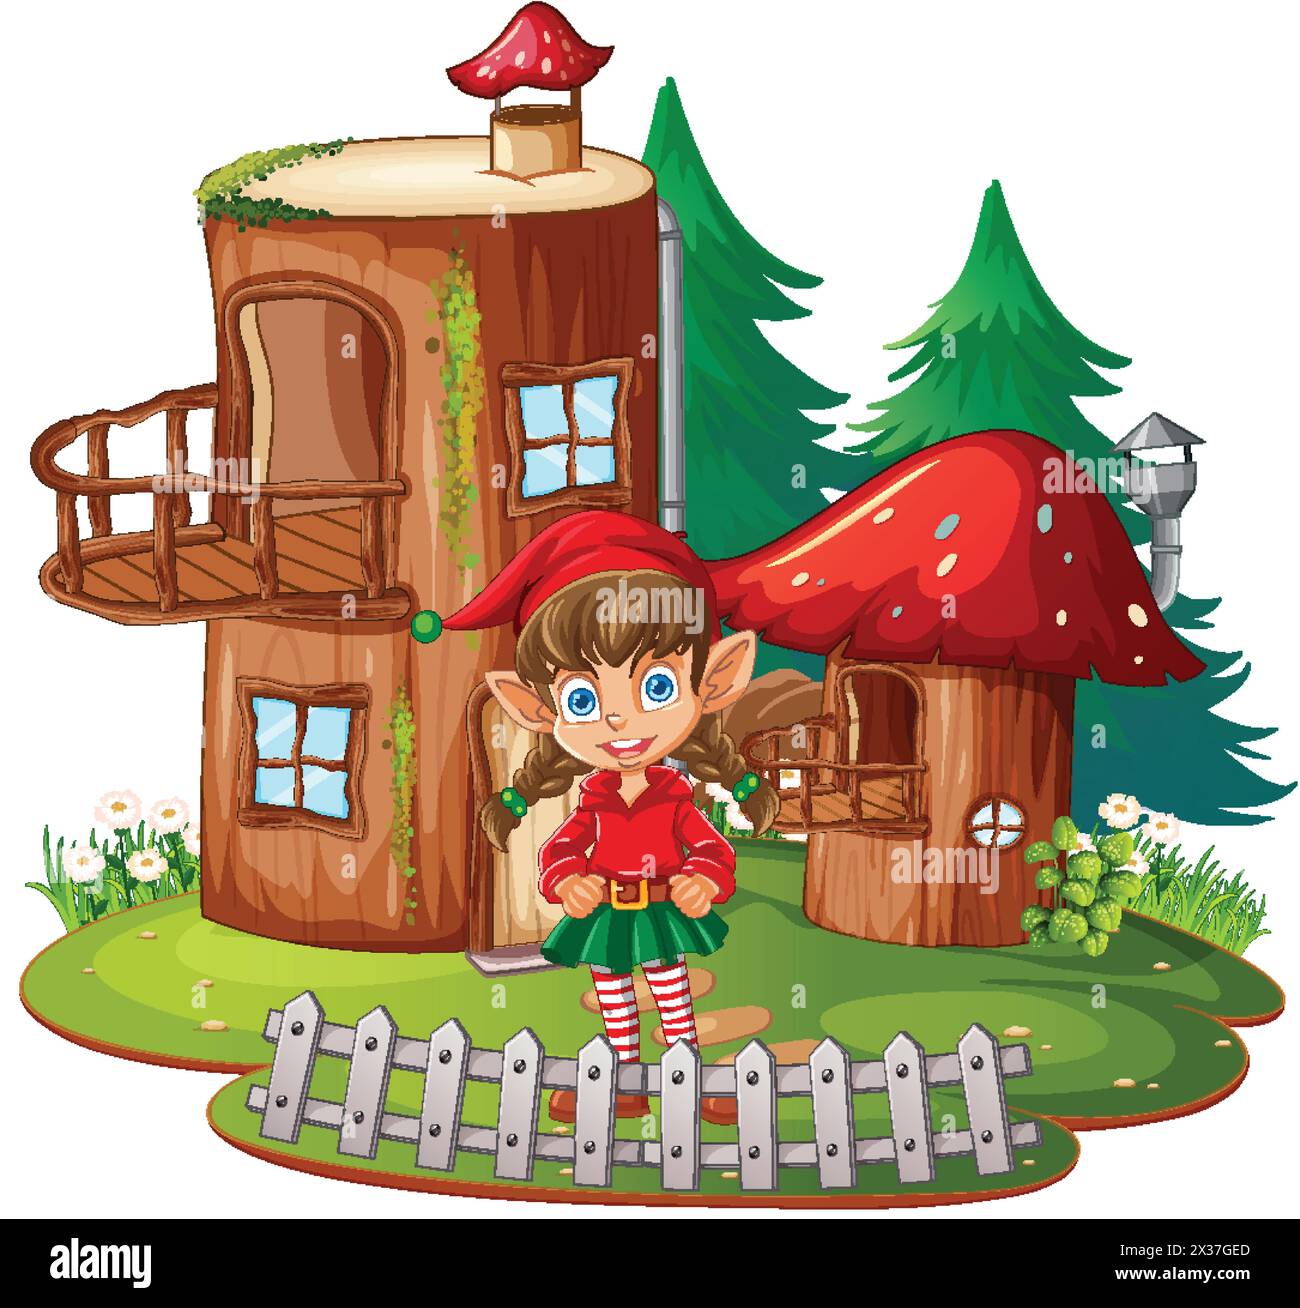 Cheerful elf outside a whimsical mushroom house Stock Vector